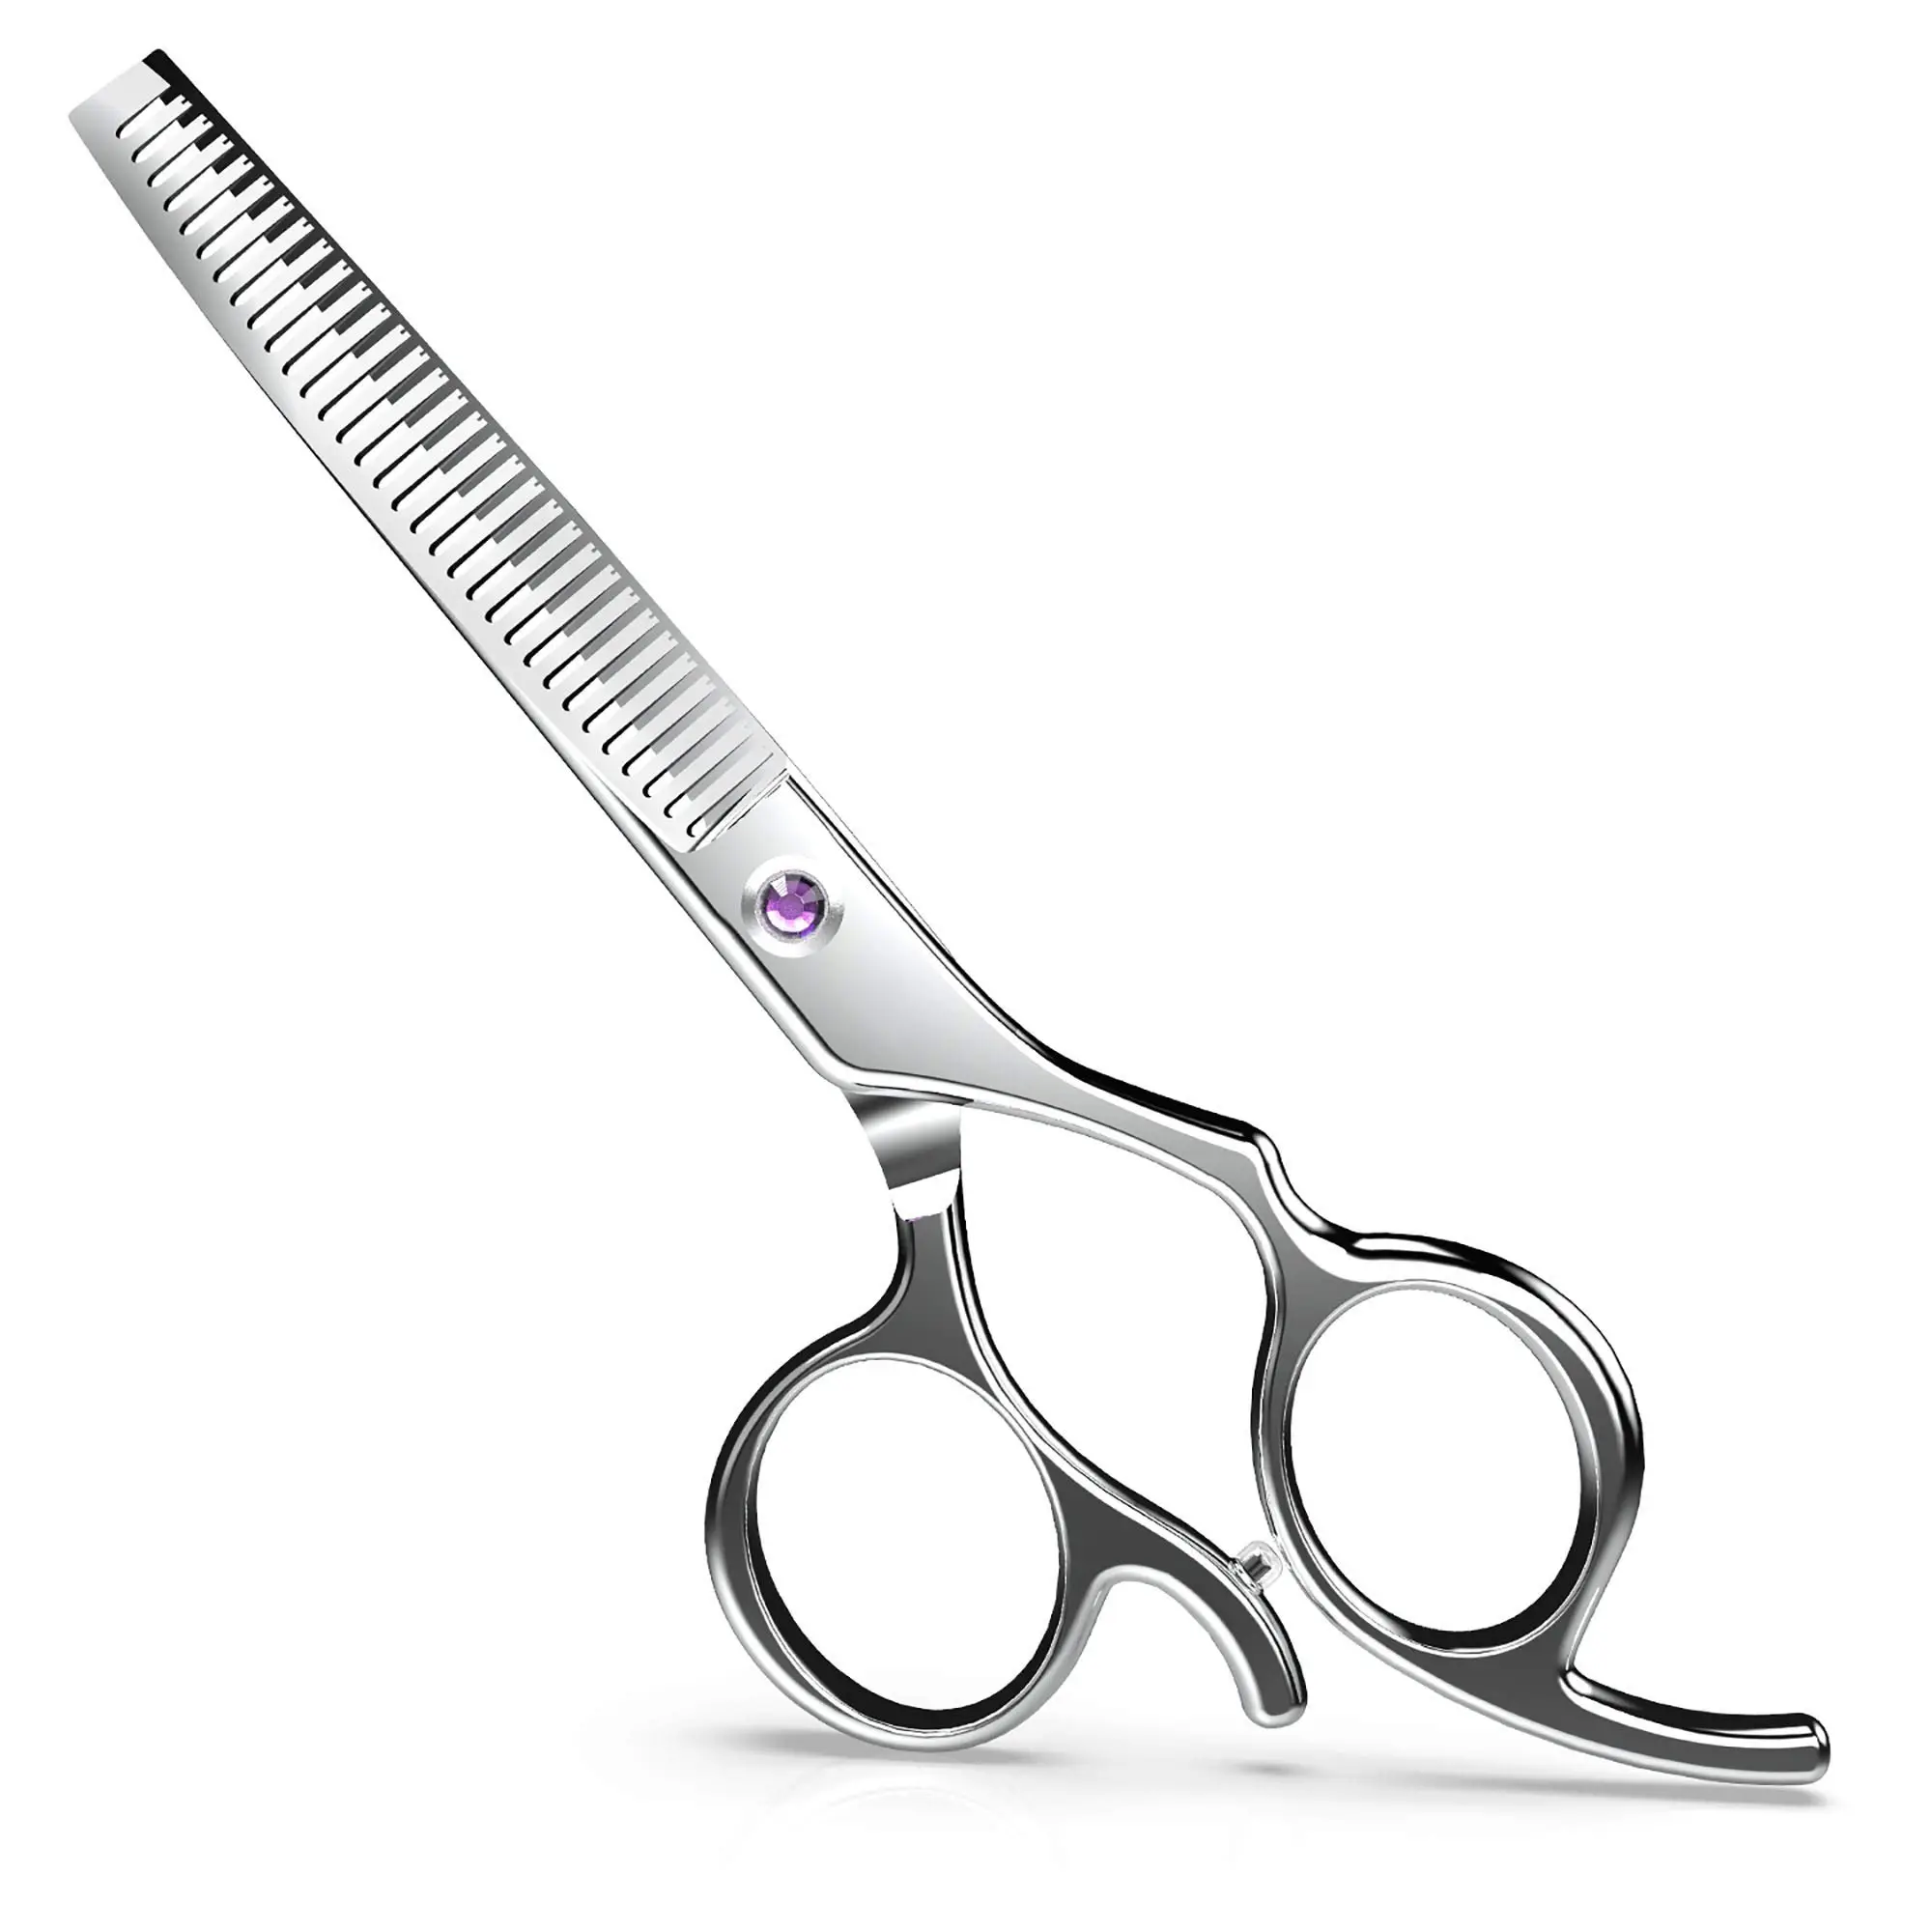 Cheap Hair Cutting Thinning Scissors Barber Salon Hairdressing Scissors for Men Women Adults